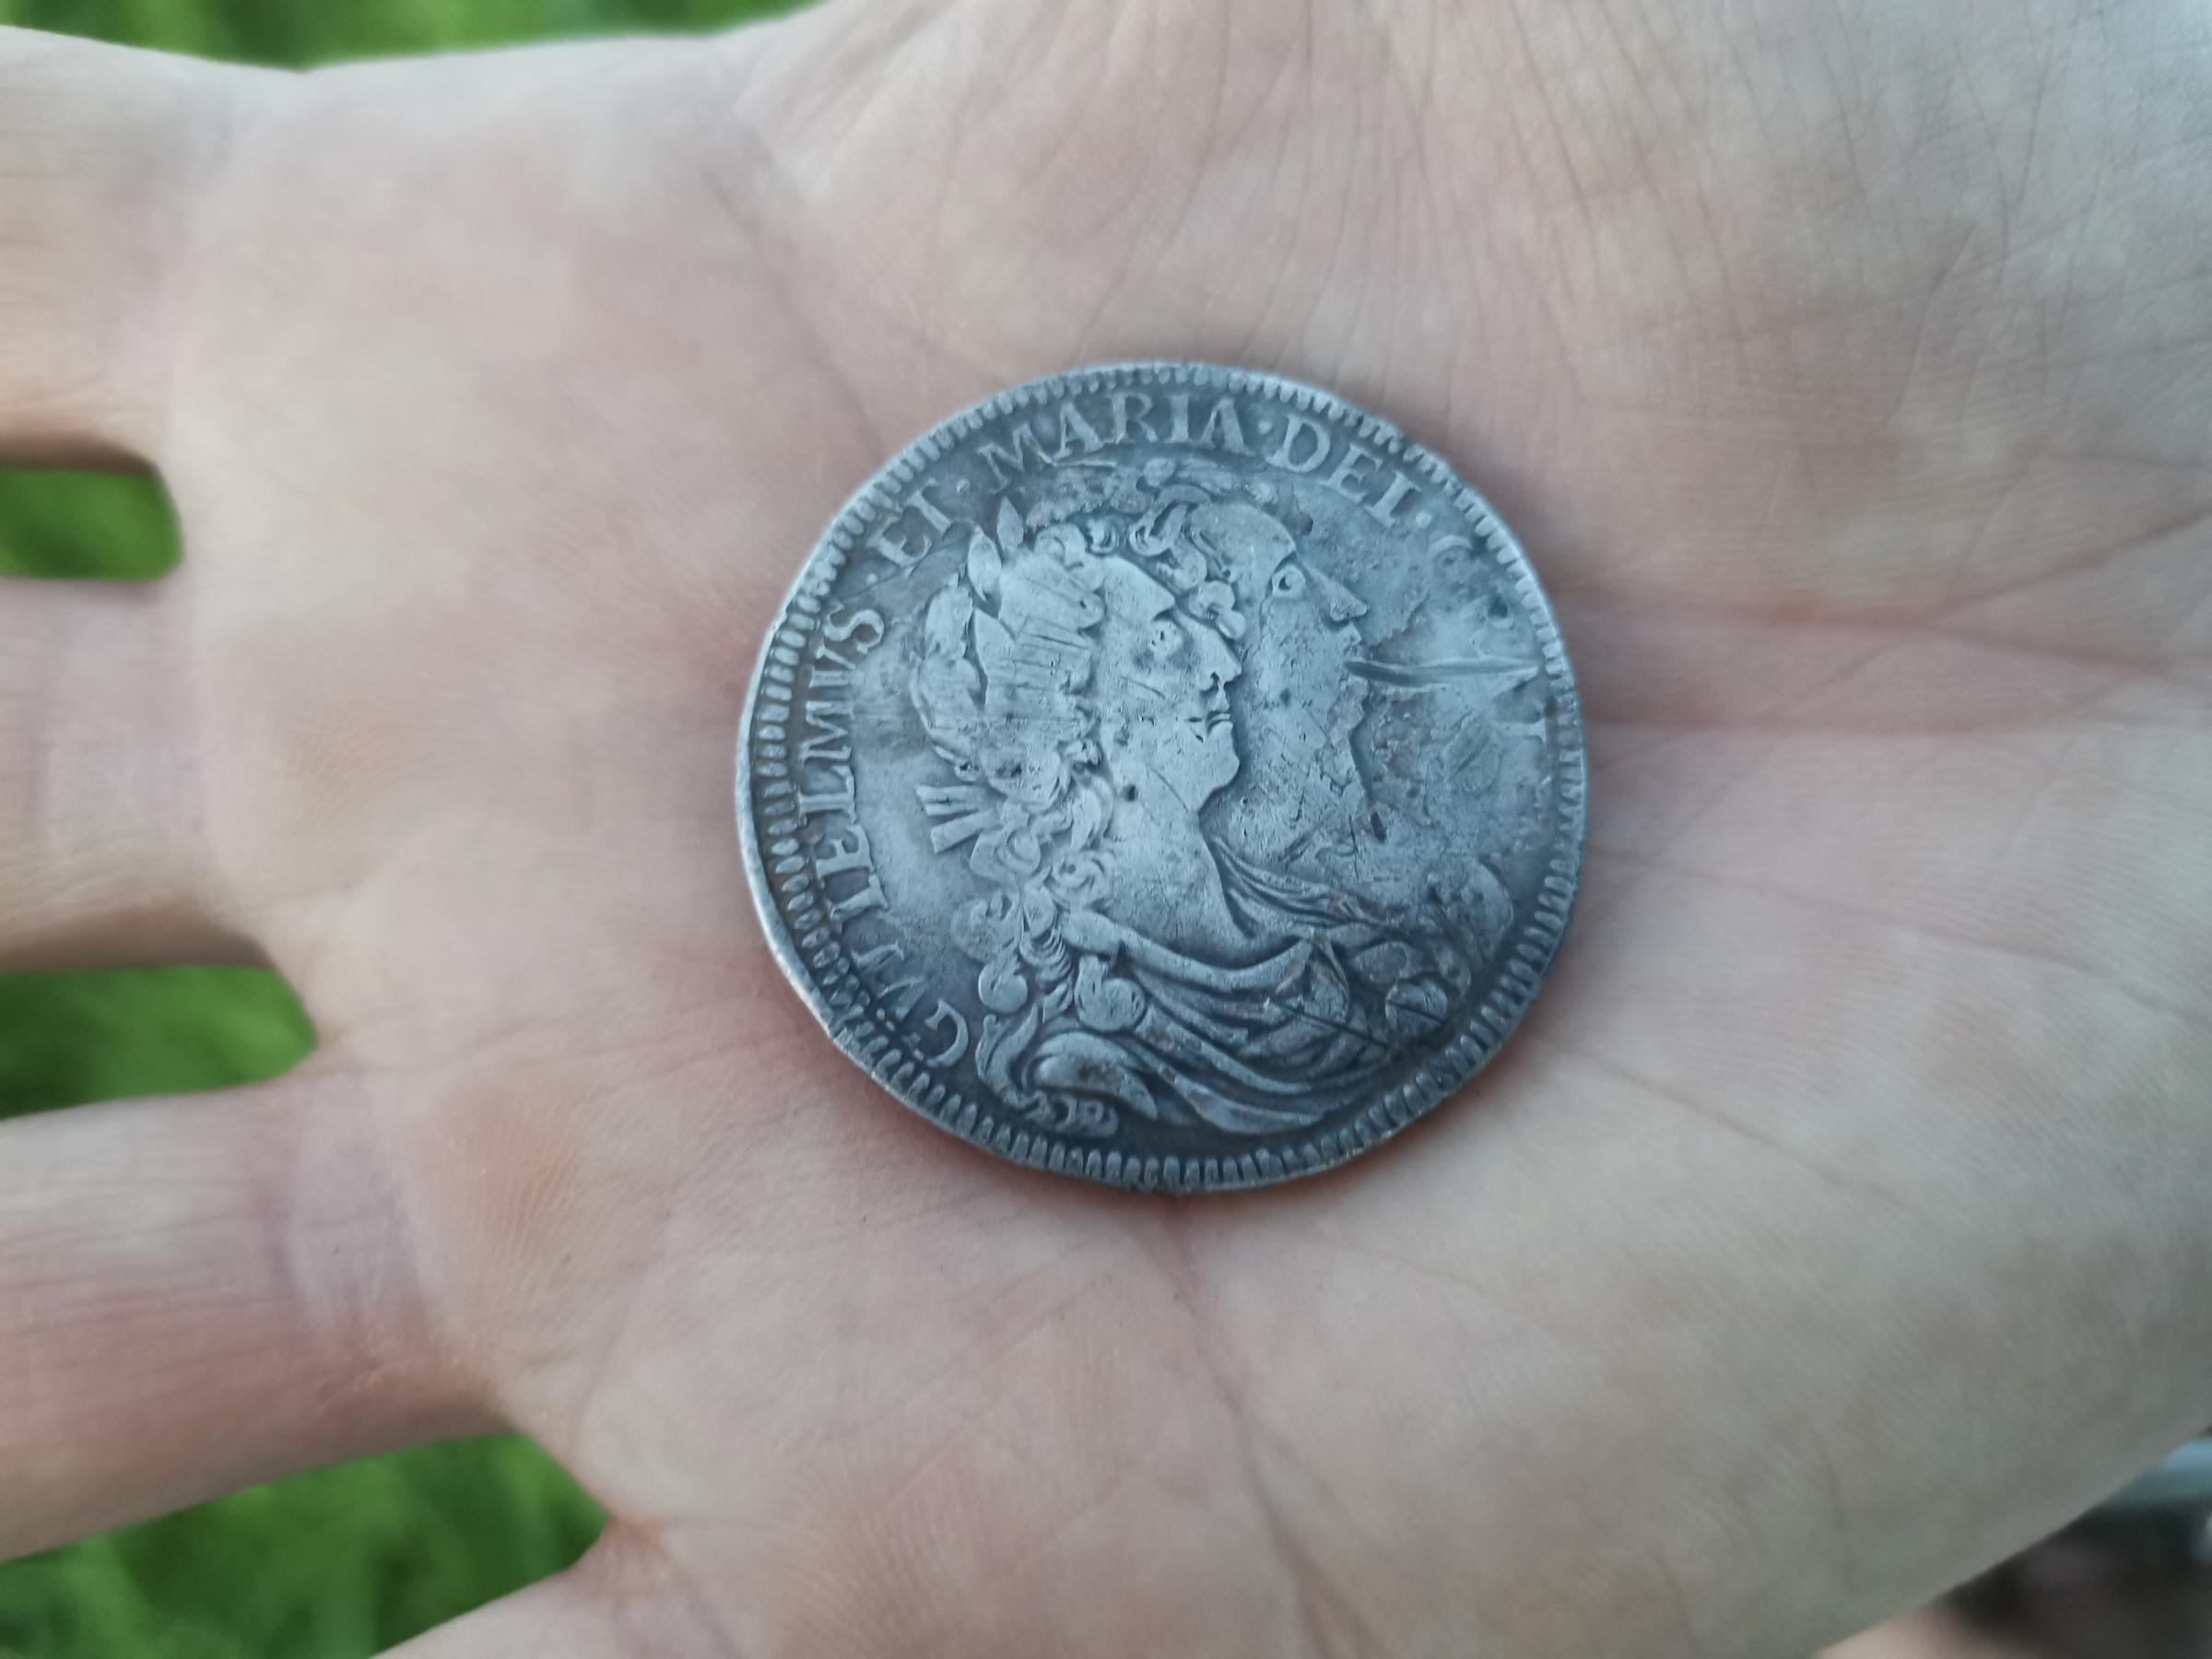 A coin Daniel found while metal detectoring.